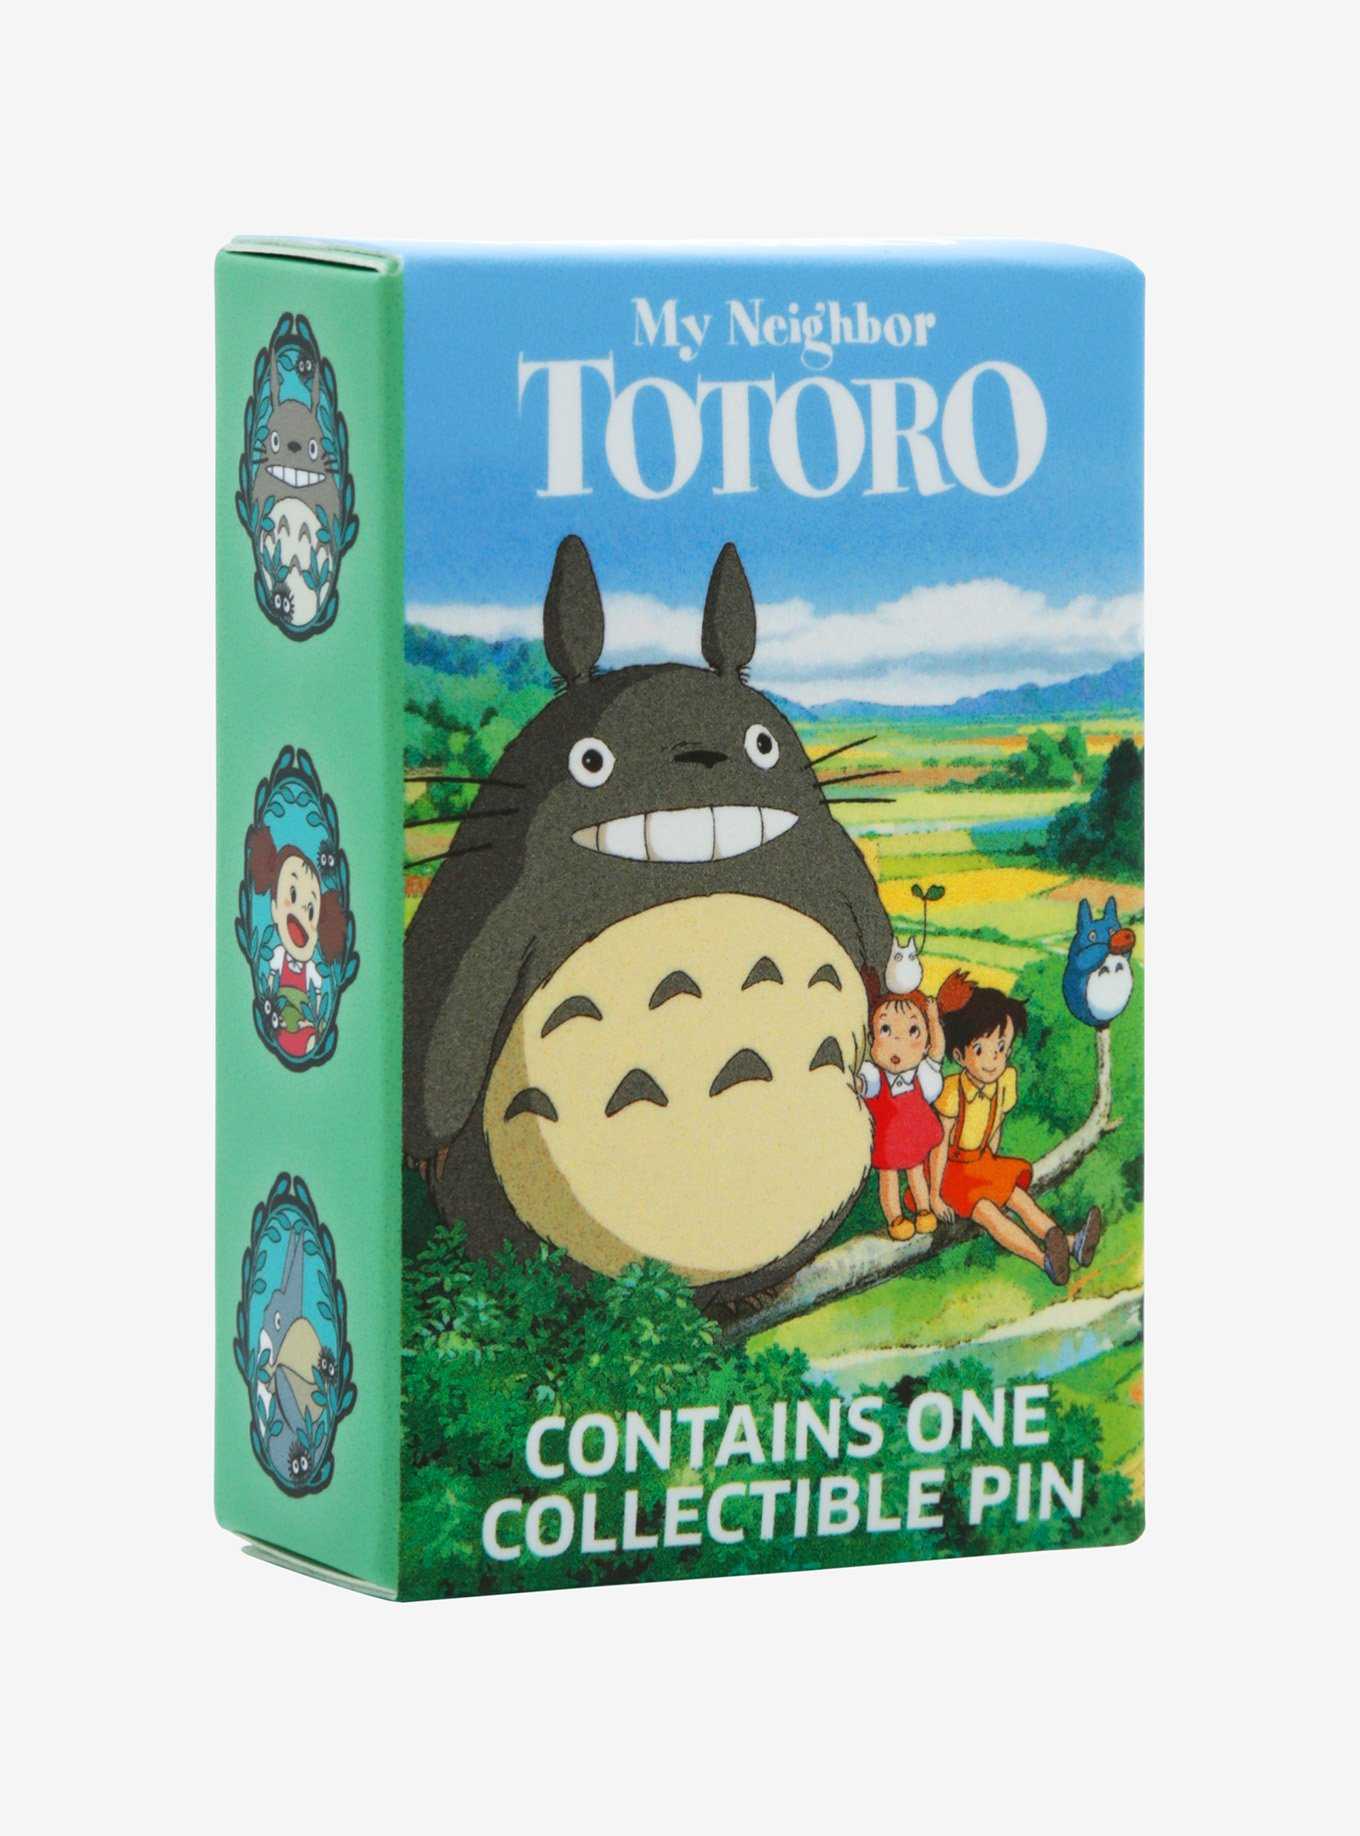 Studio Ghibli All Characters Phone Charm: Totoro, Kiki, Jiji, Mie, Ponyo,  Yubaba | Ghibli Merch Store